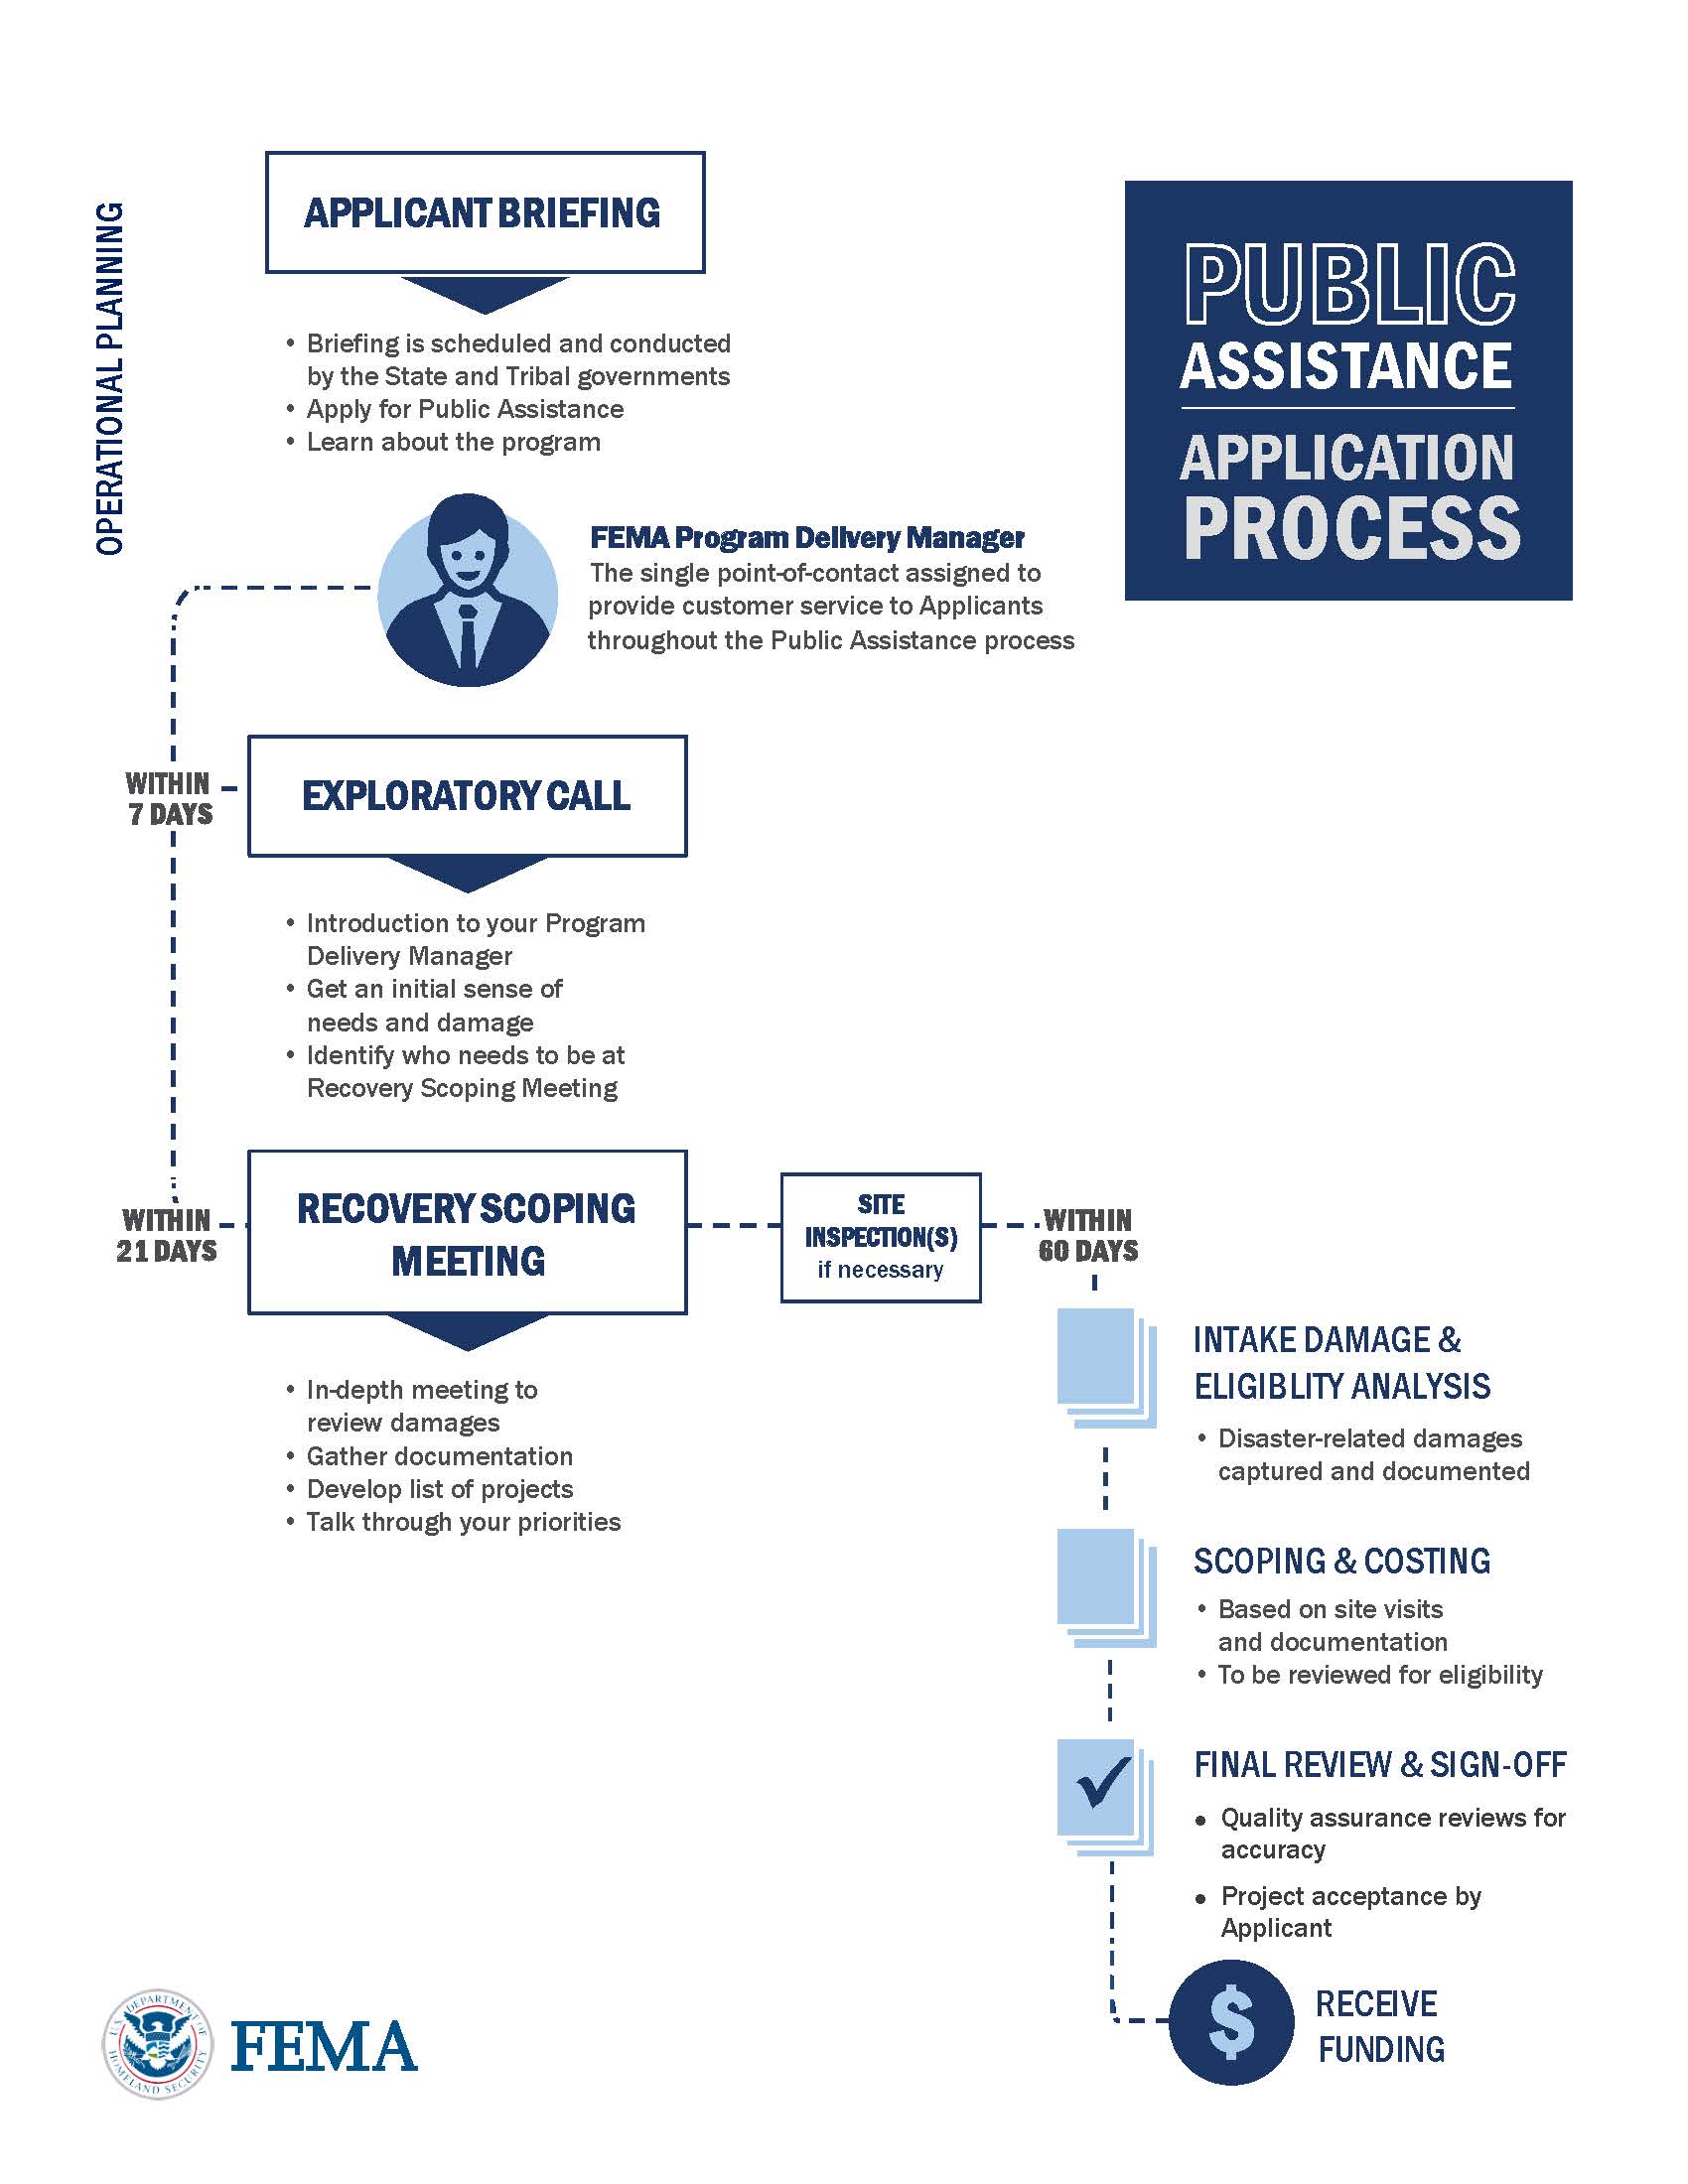 FEMA Public Assistance Application Process